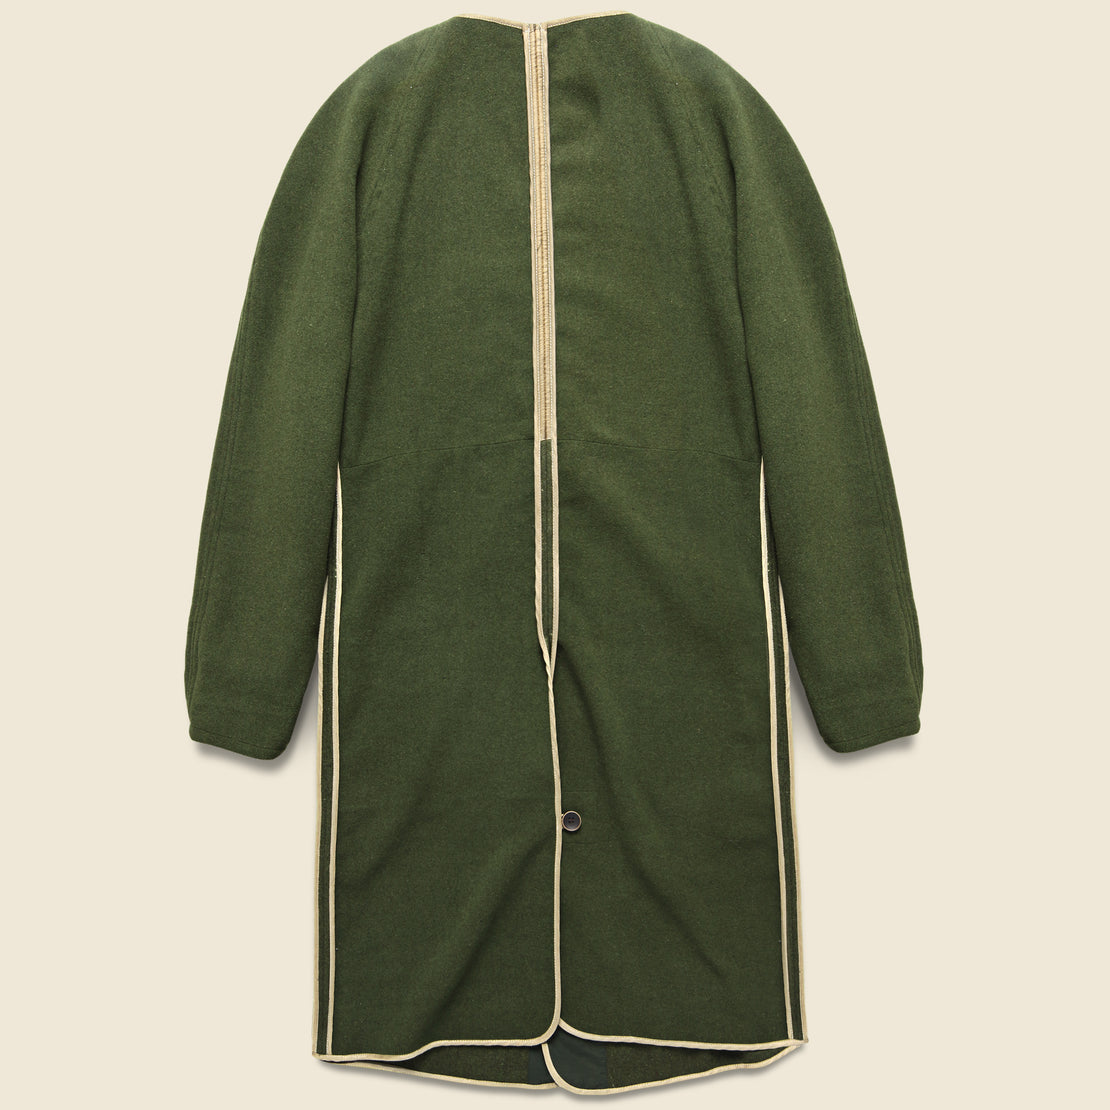 Halsey Coat - Olive Drab - Imogene + Willie - STAG Provisions - W - Outerwear - Coat/Jacket